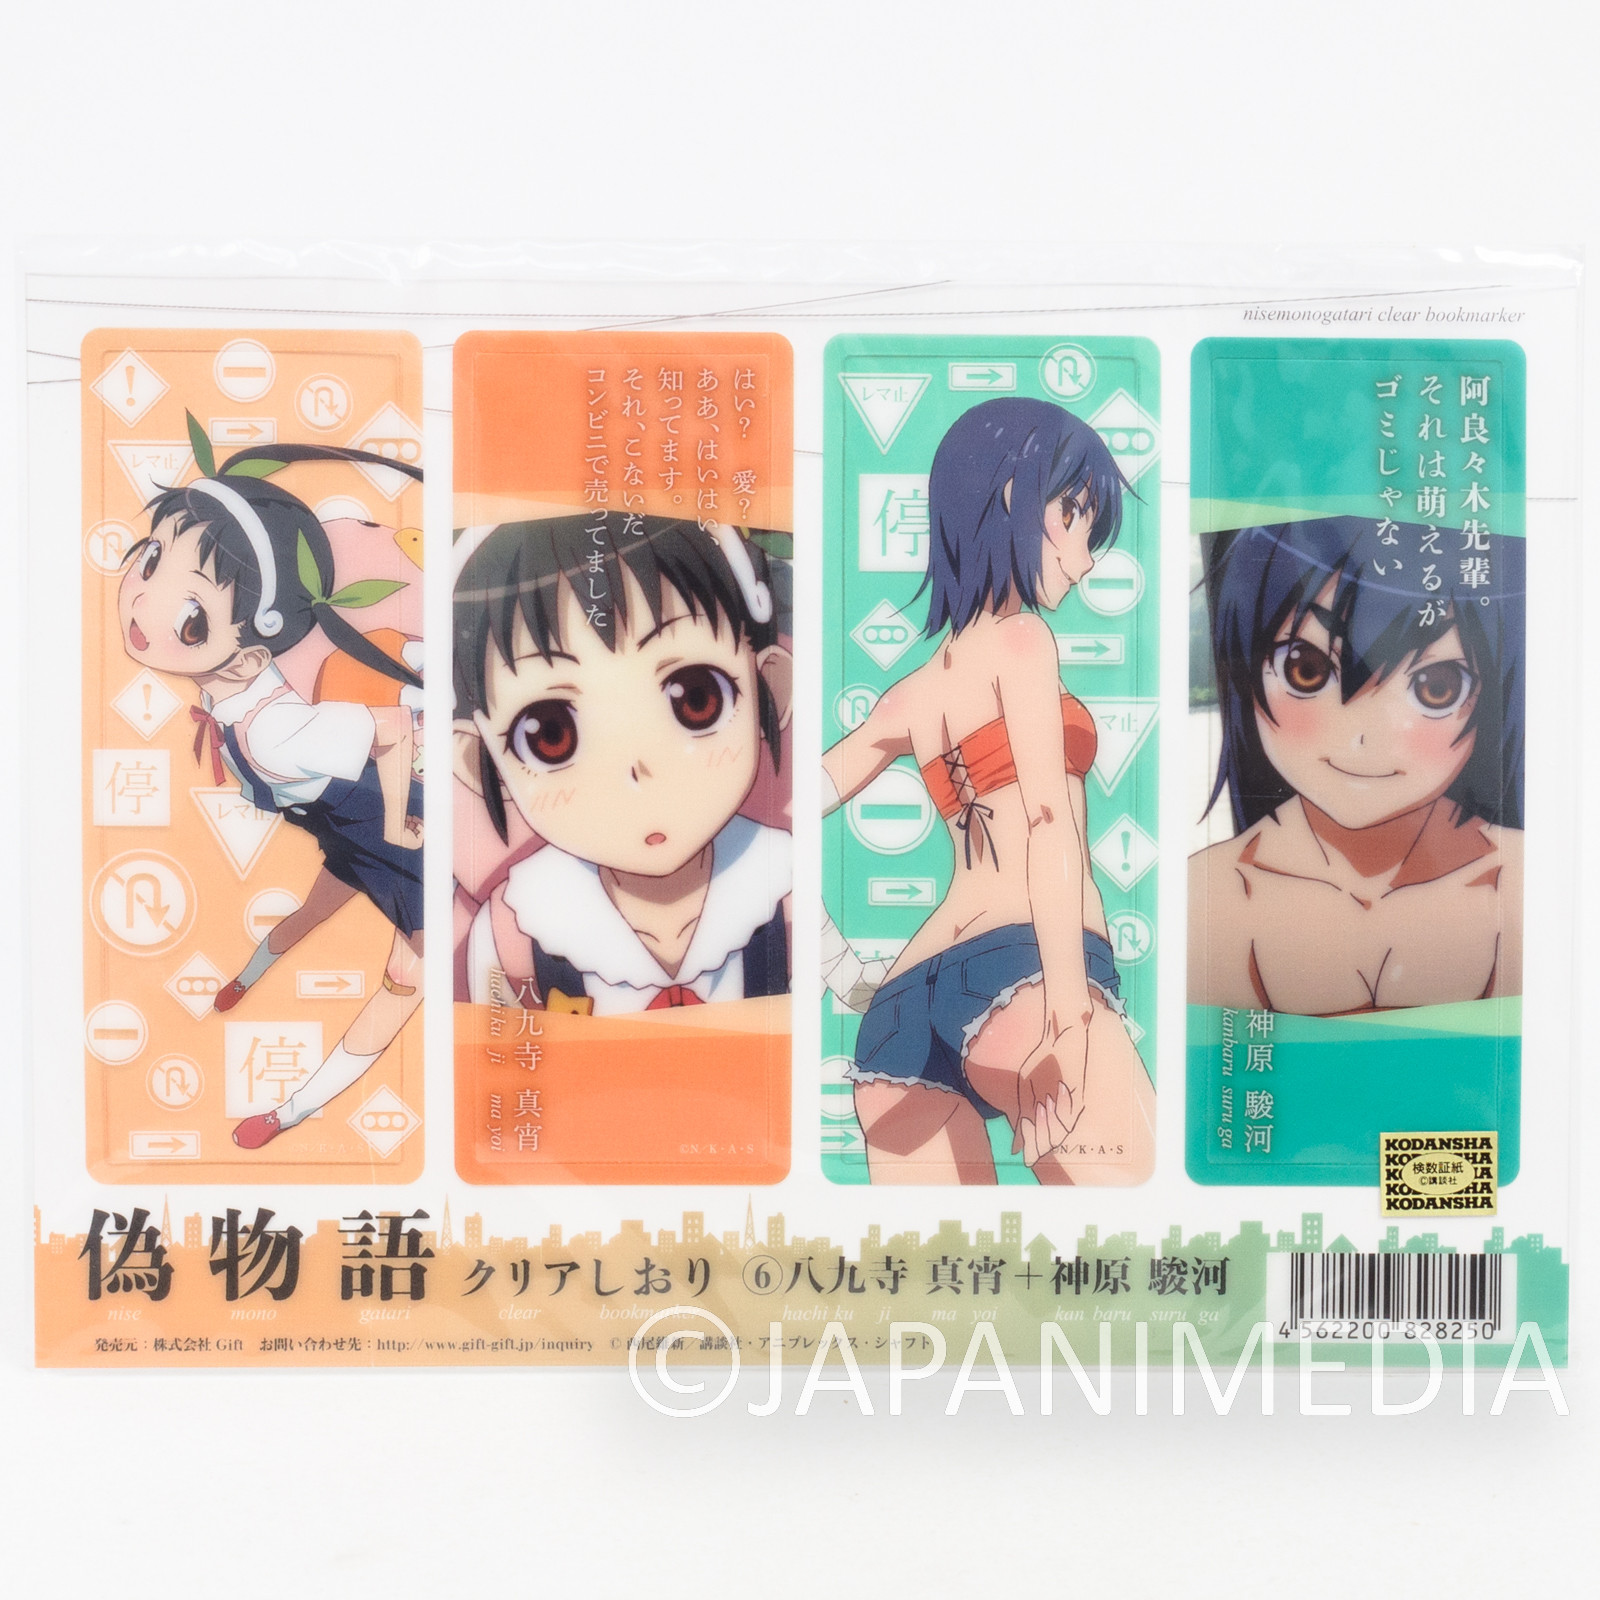 Bakemonogatari Mayoi Hachikuji Suruga Kanbara Clear Bookmark 4pc Sheet / Nisemonogatari